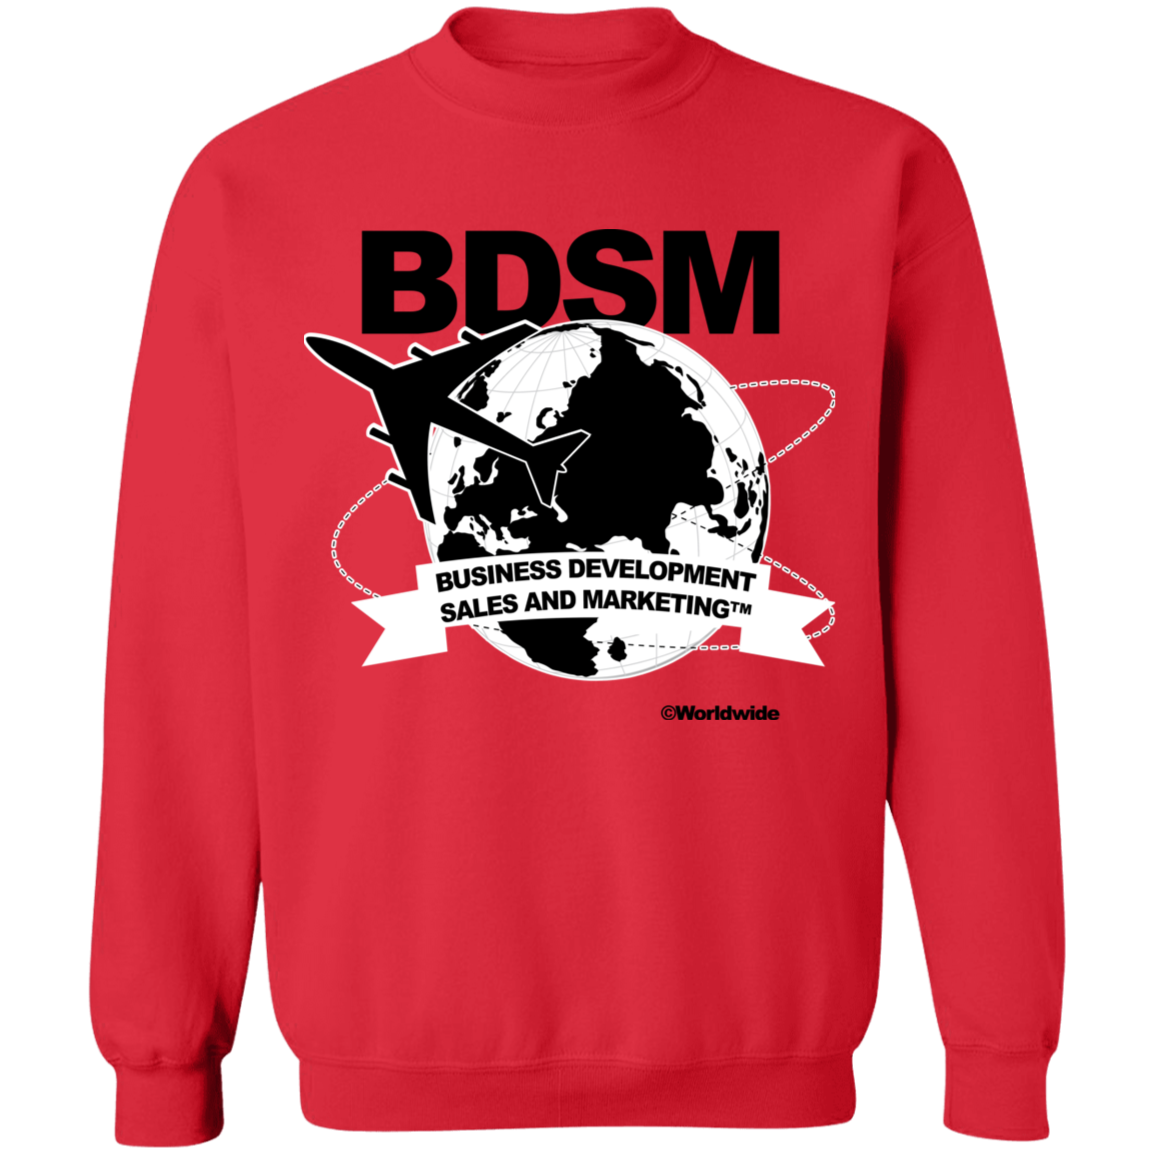 BDSM™ Business Development Sales and Marketing